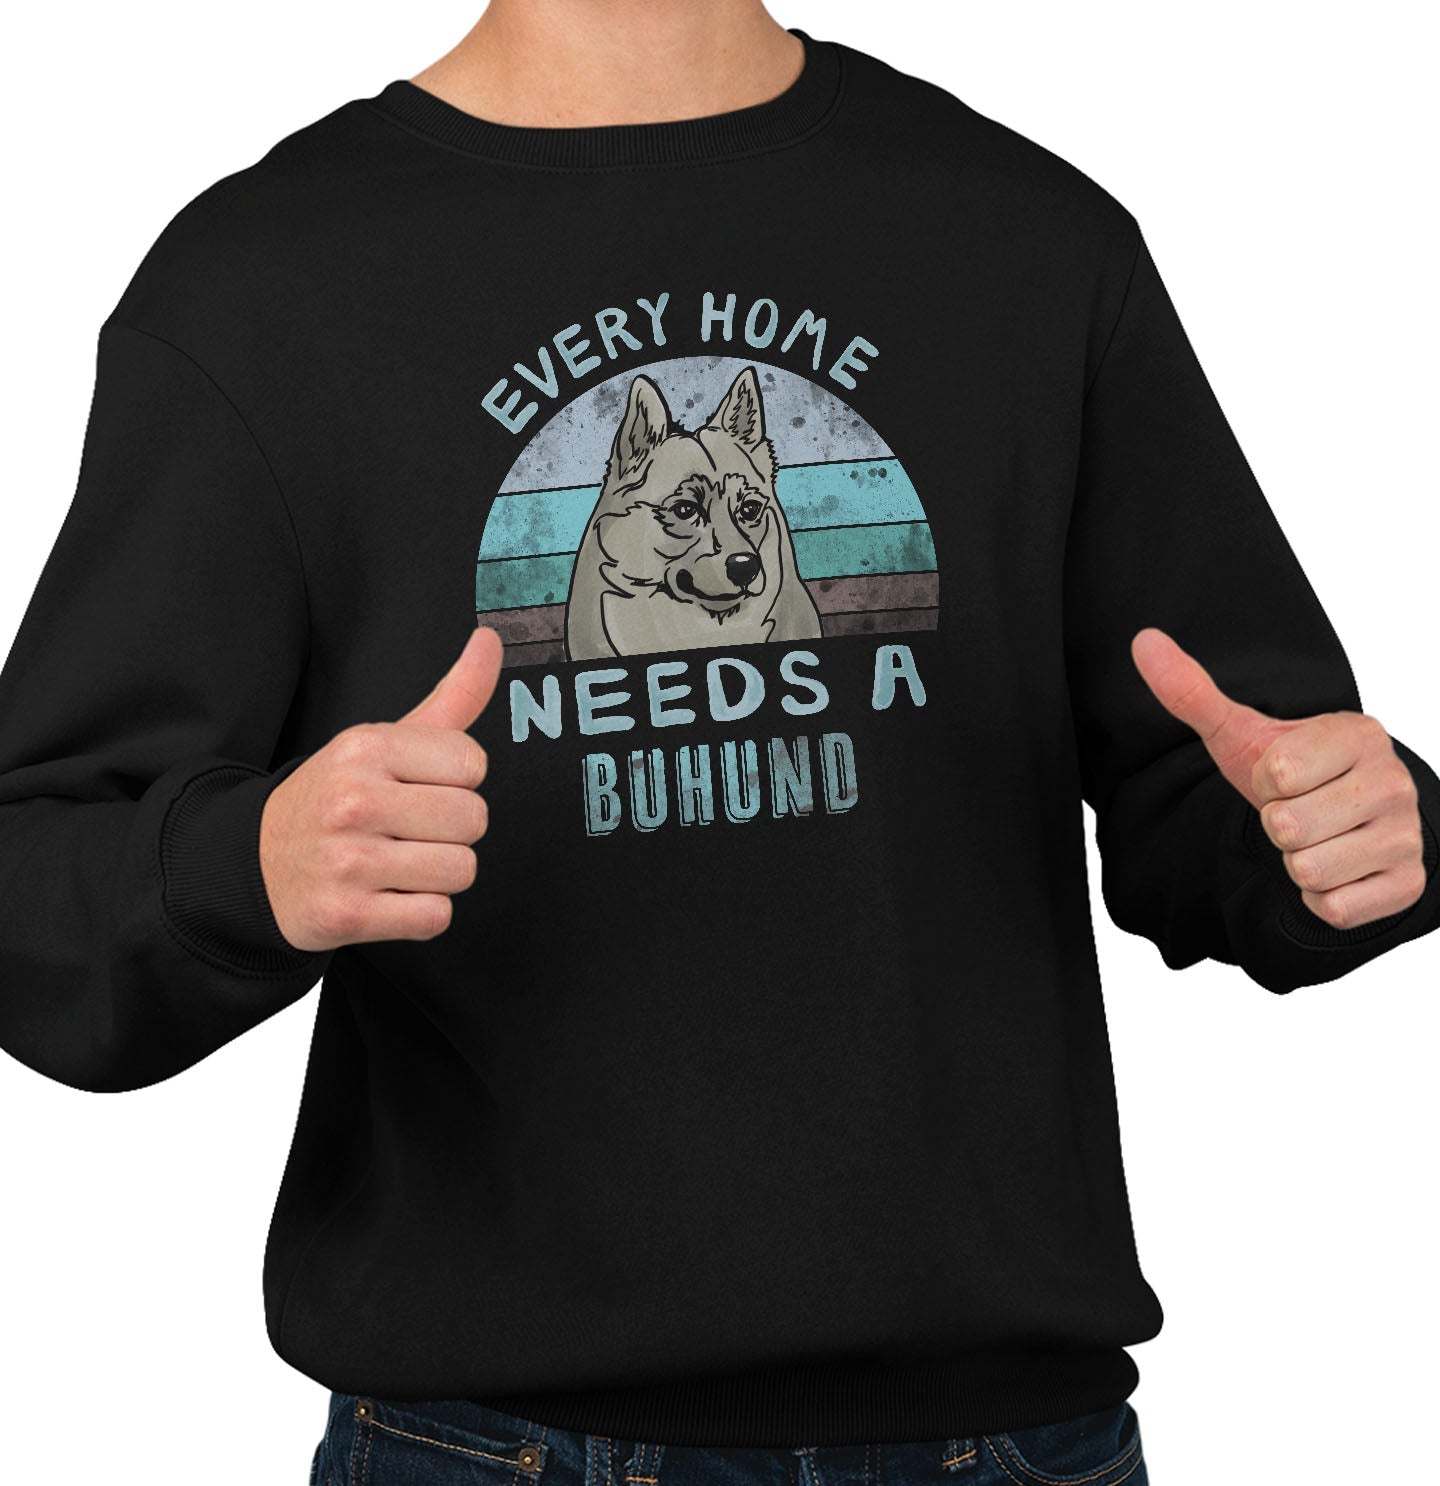 Every Home Needs a Norwegian Buhund - Adult Unisex Crewneck Sweatshirt